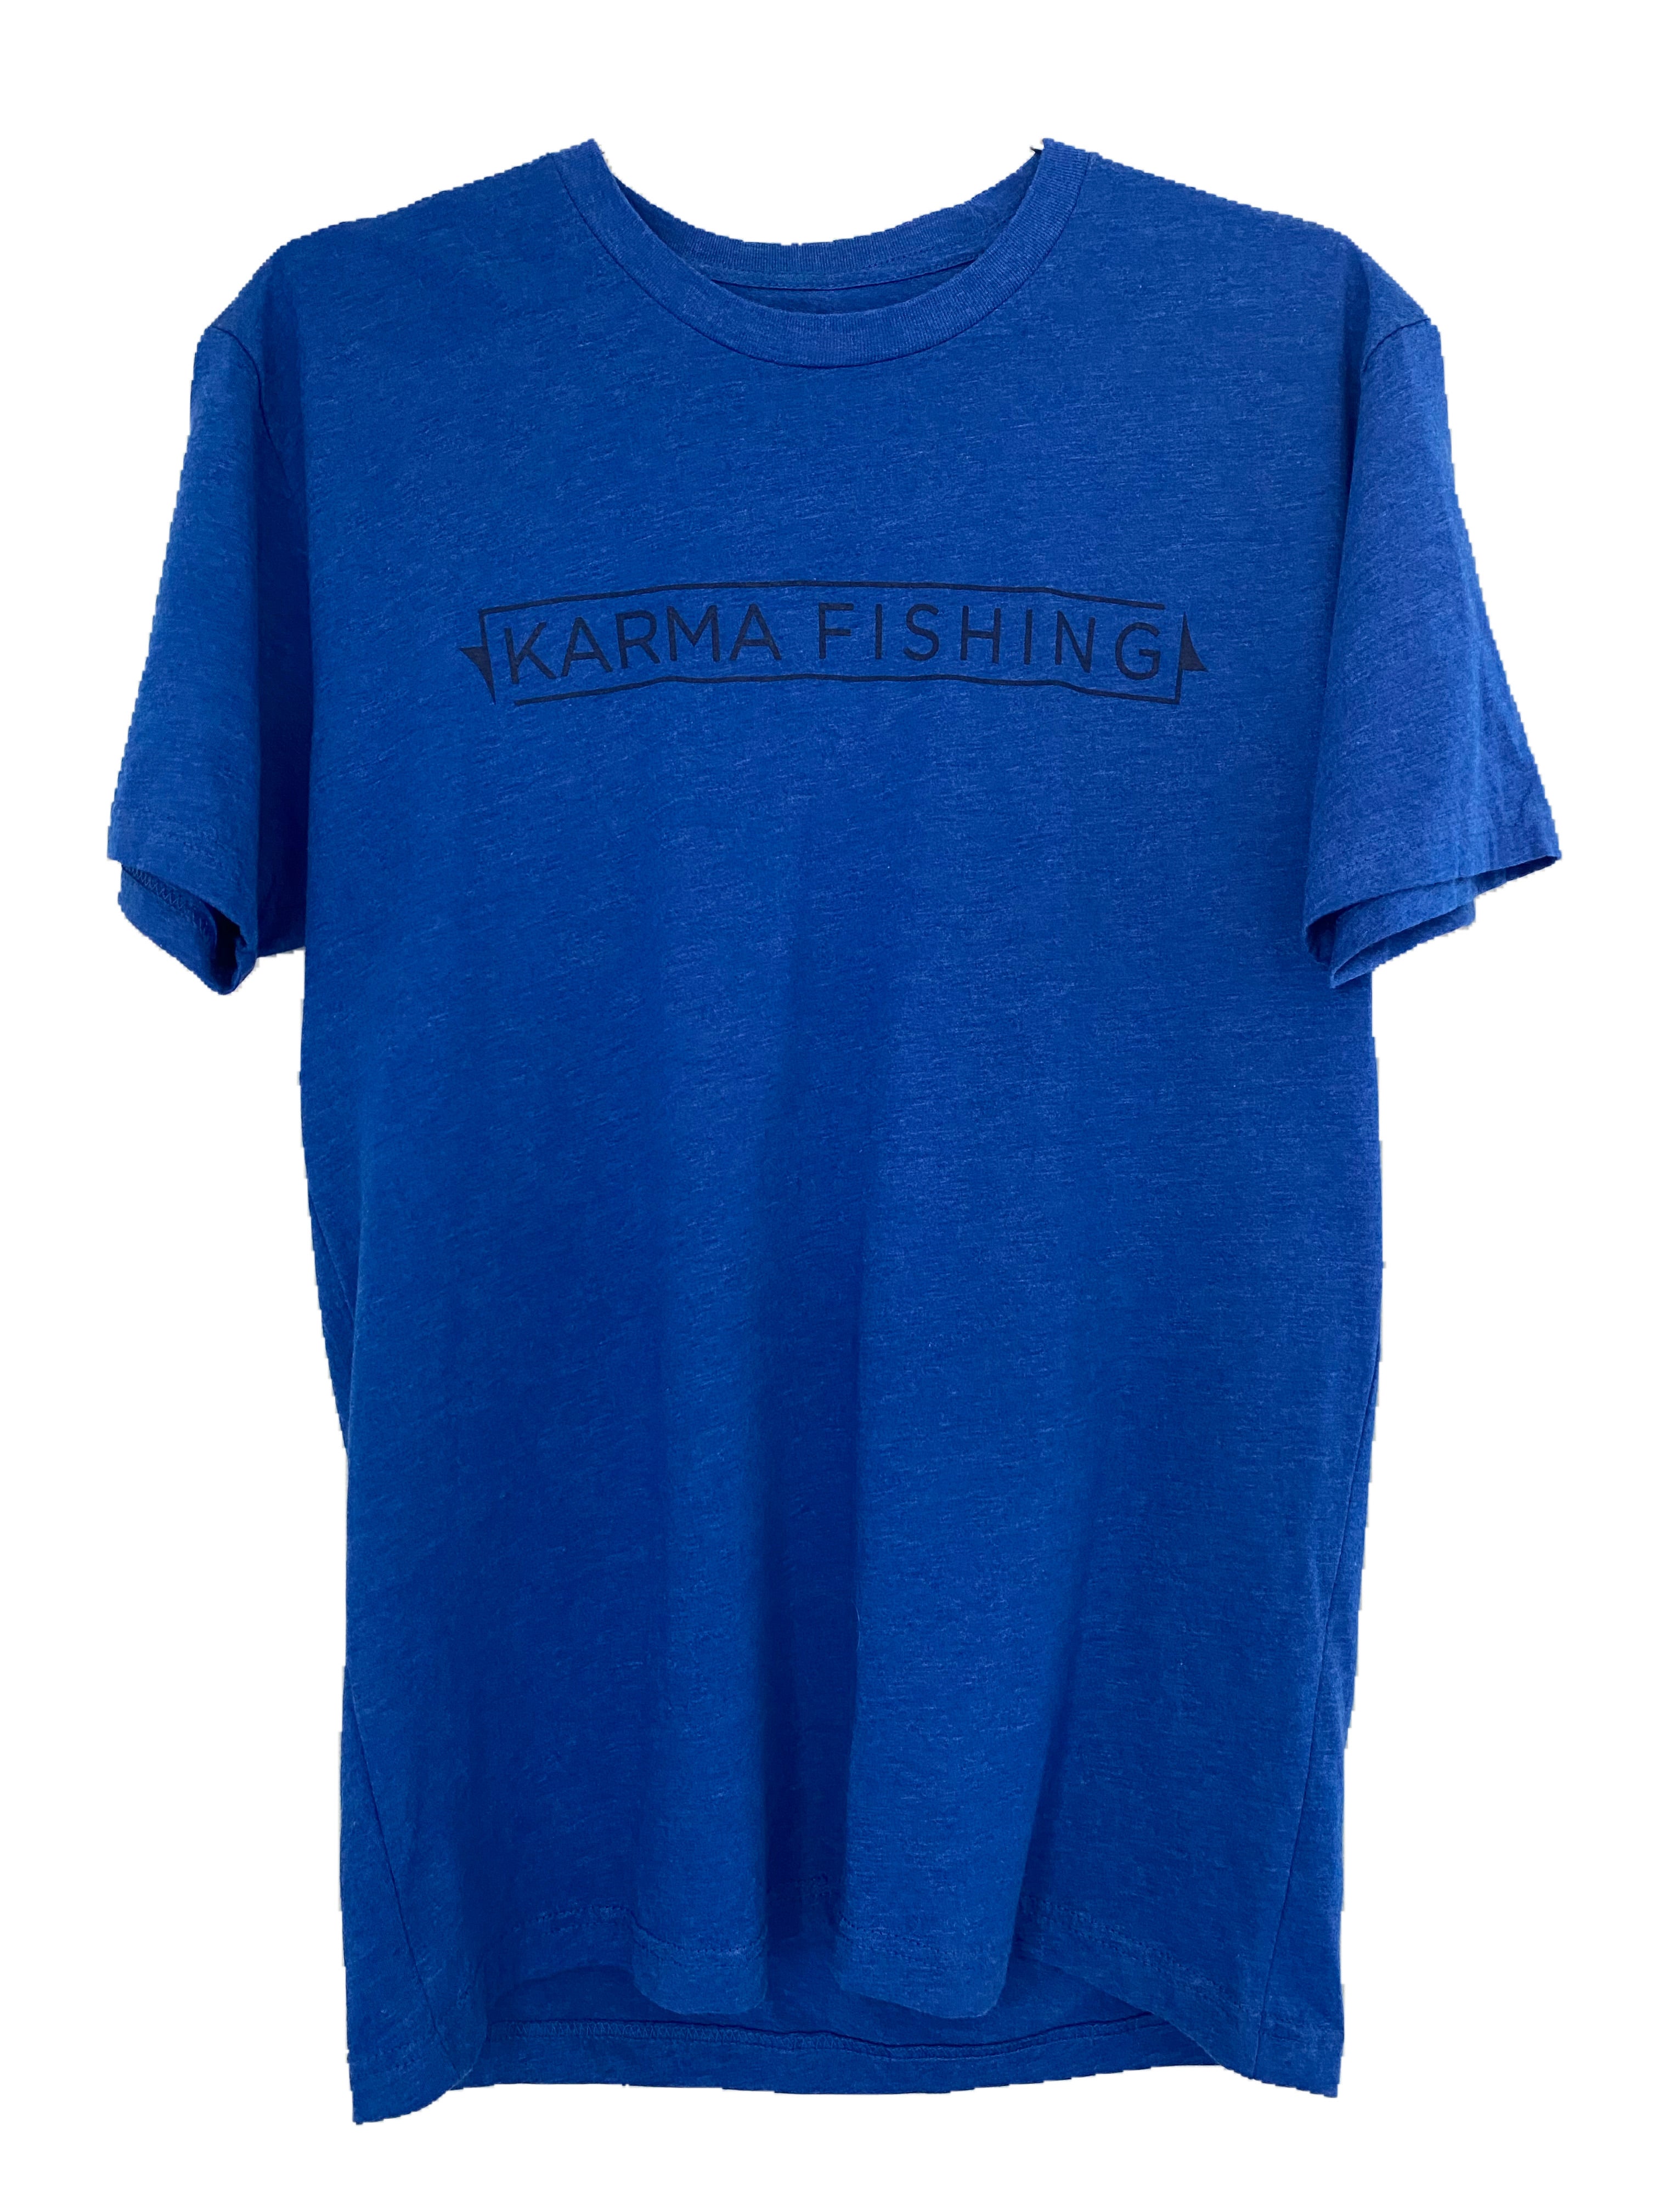 The Classy Blue Shirt – Karma Fishing Company